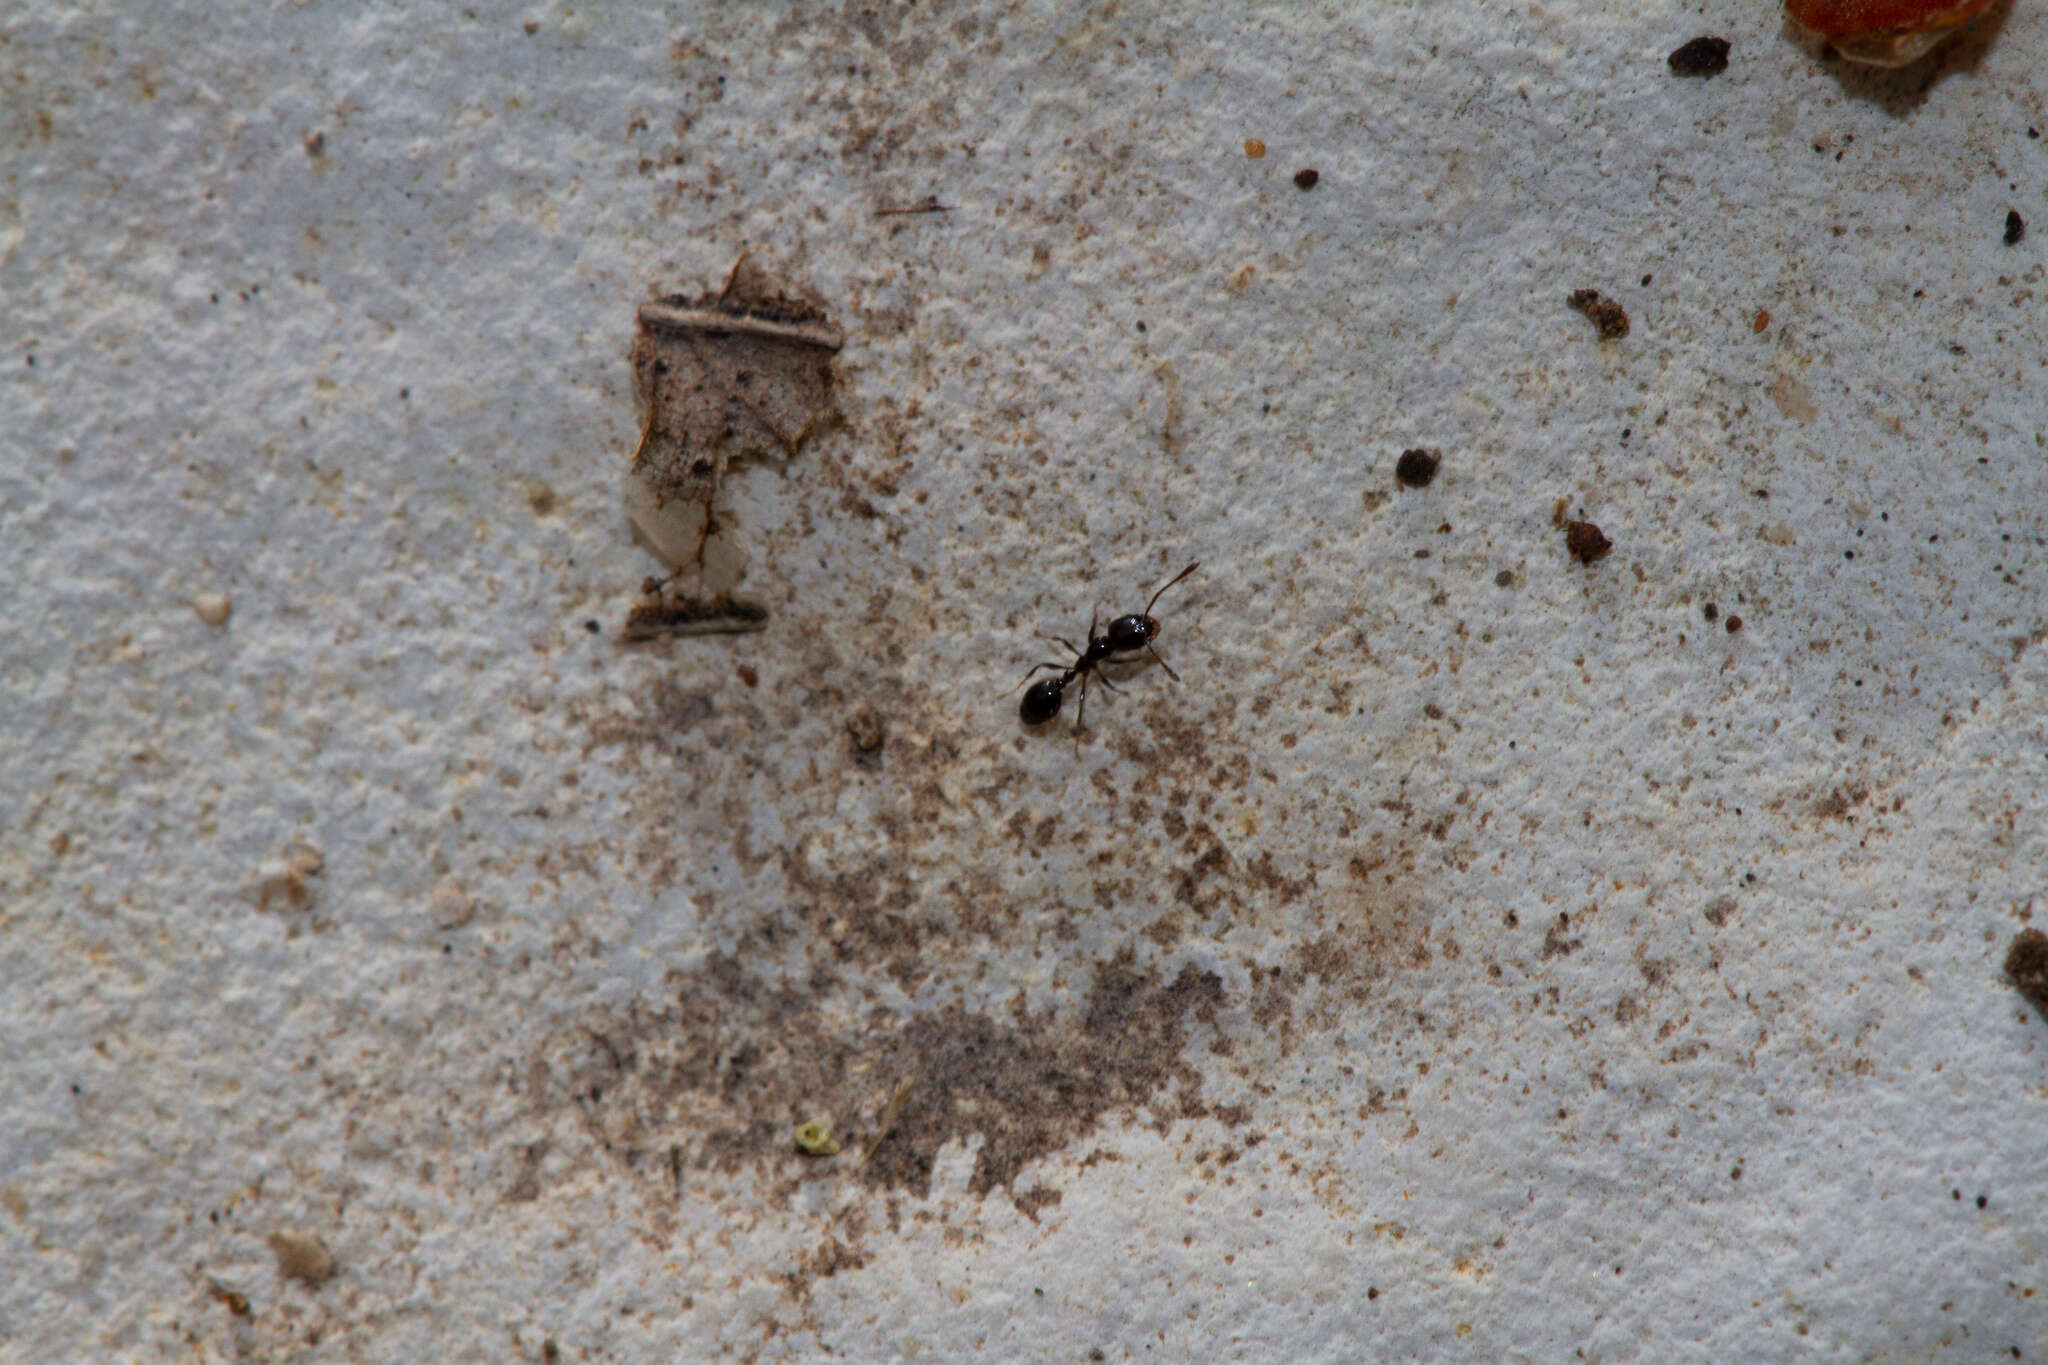 Image of Little Black Ant